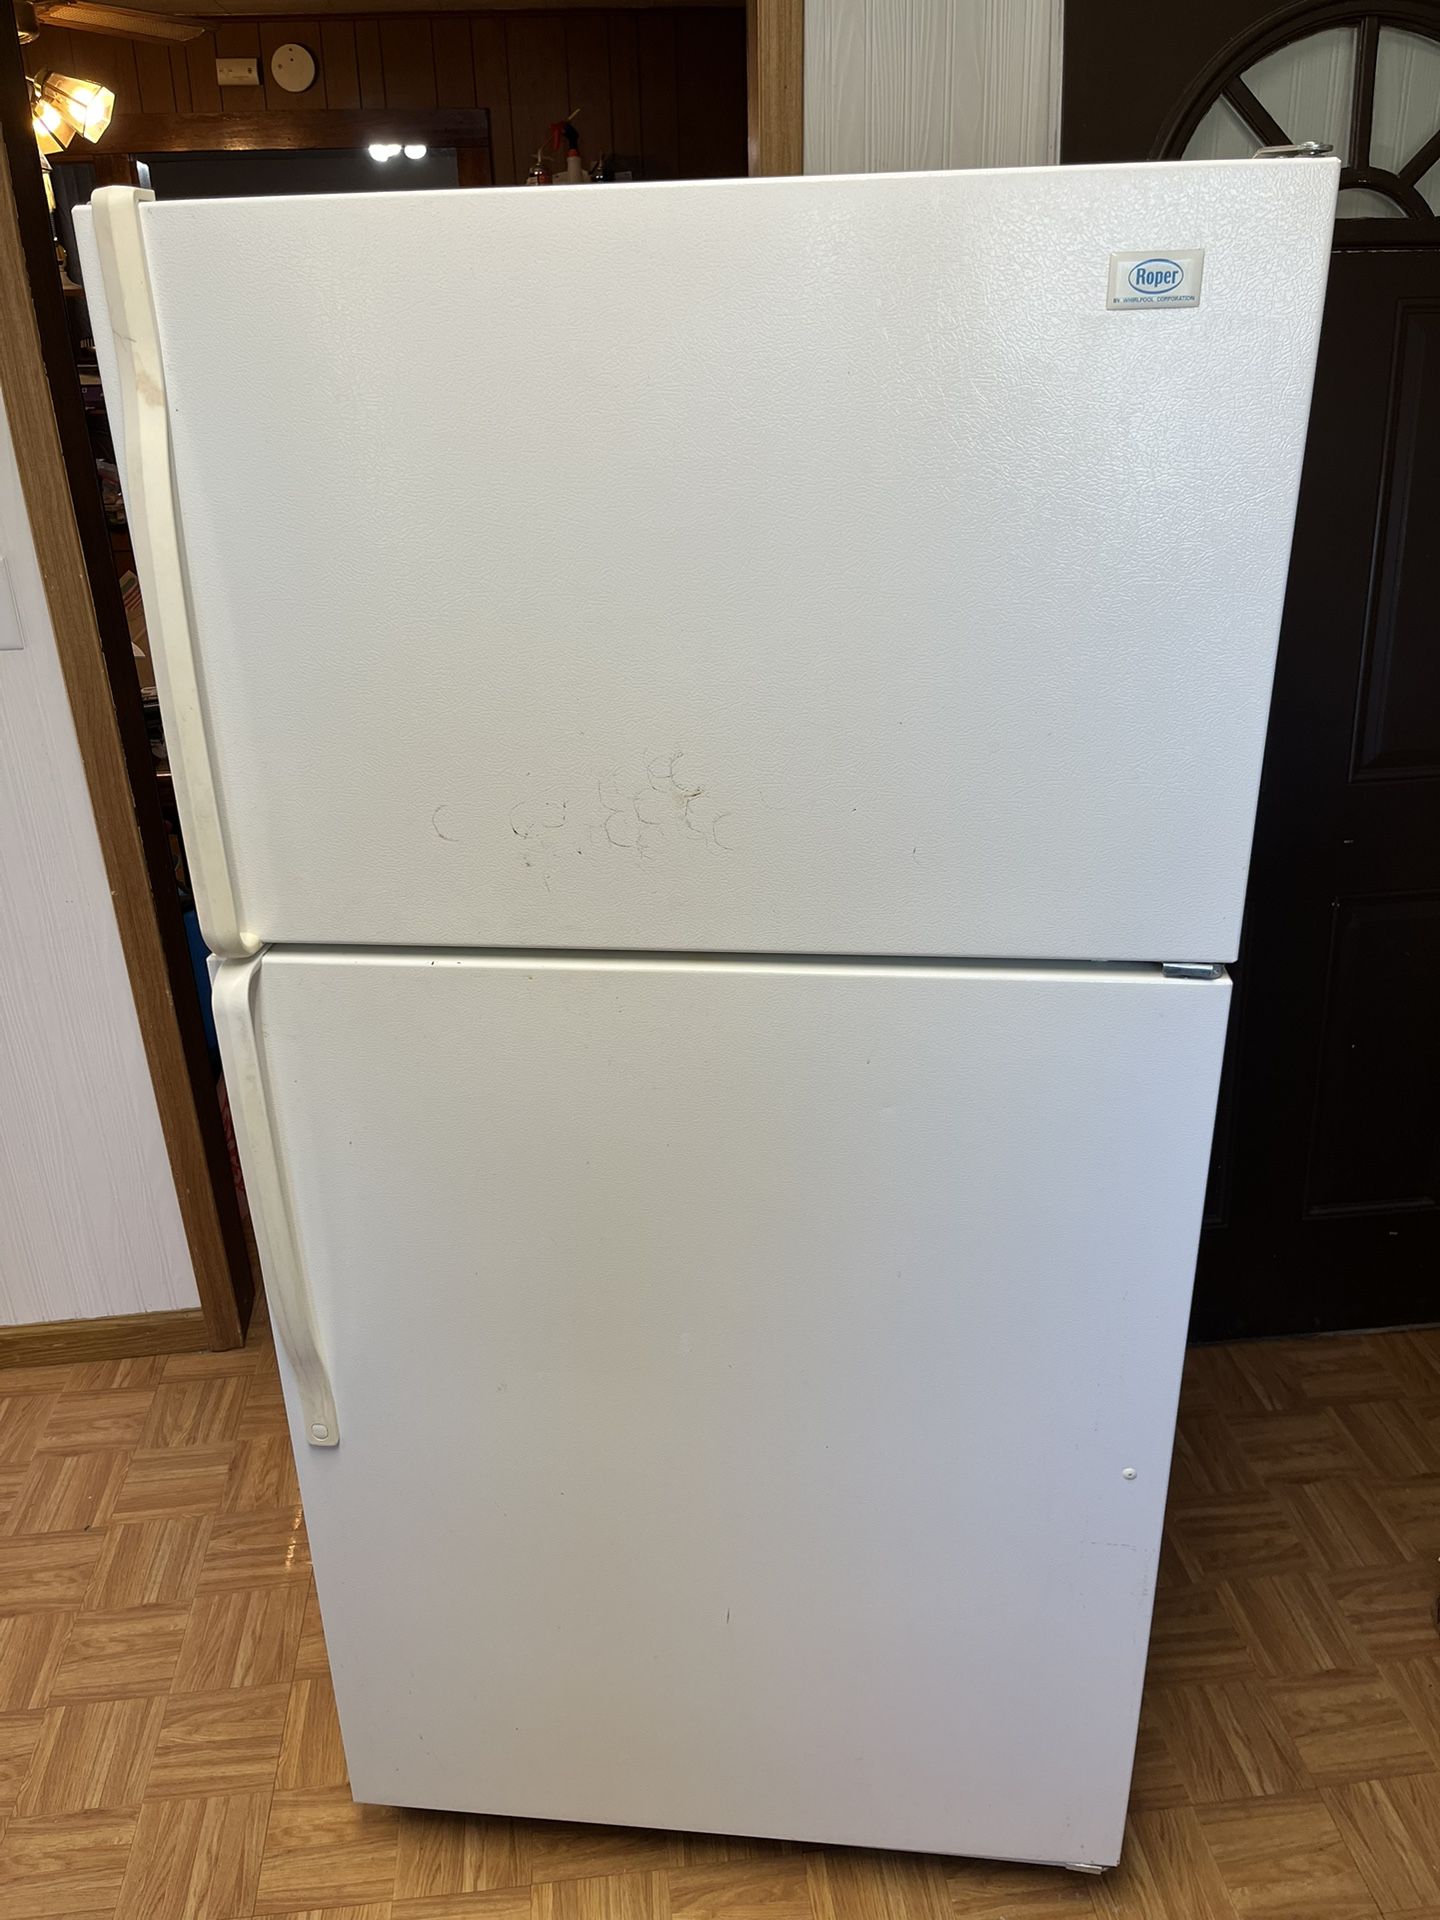 Roper Refrigerator by Whirlpool